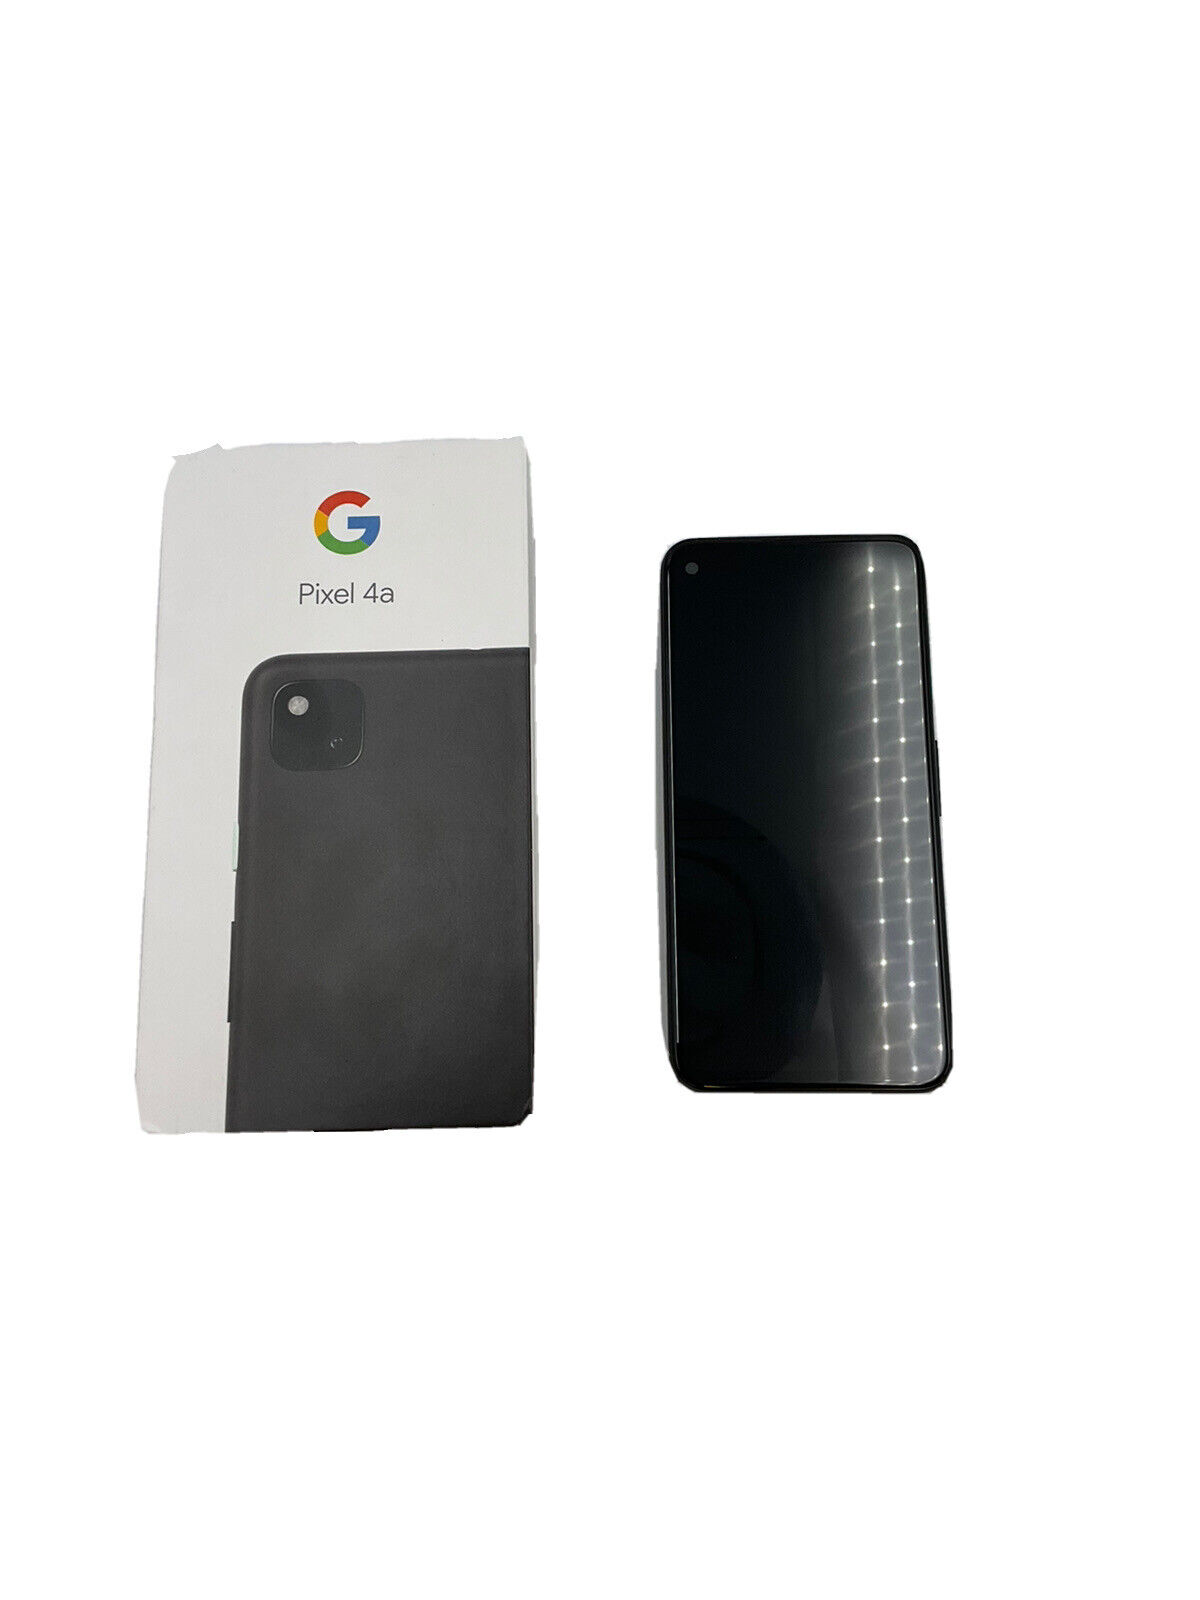 The Price of Google Pixel 4a 128GB Factory Unlocked (Just Black) Smartphone – Open Box | Google Pixel Phone